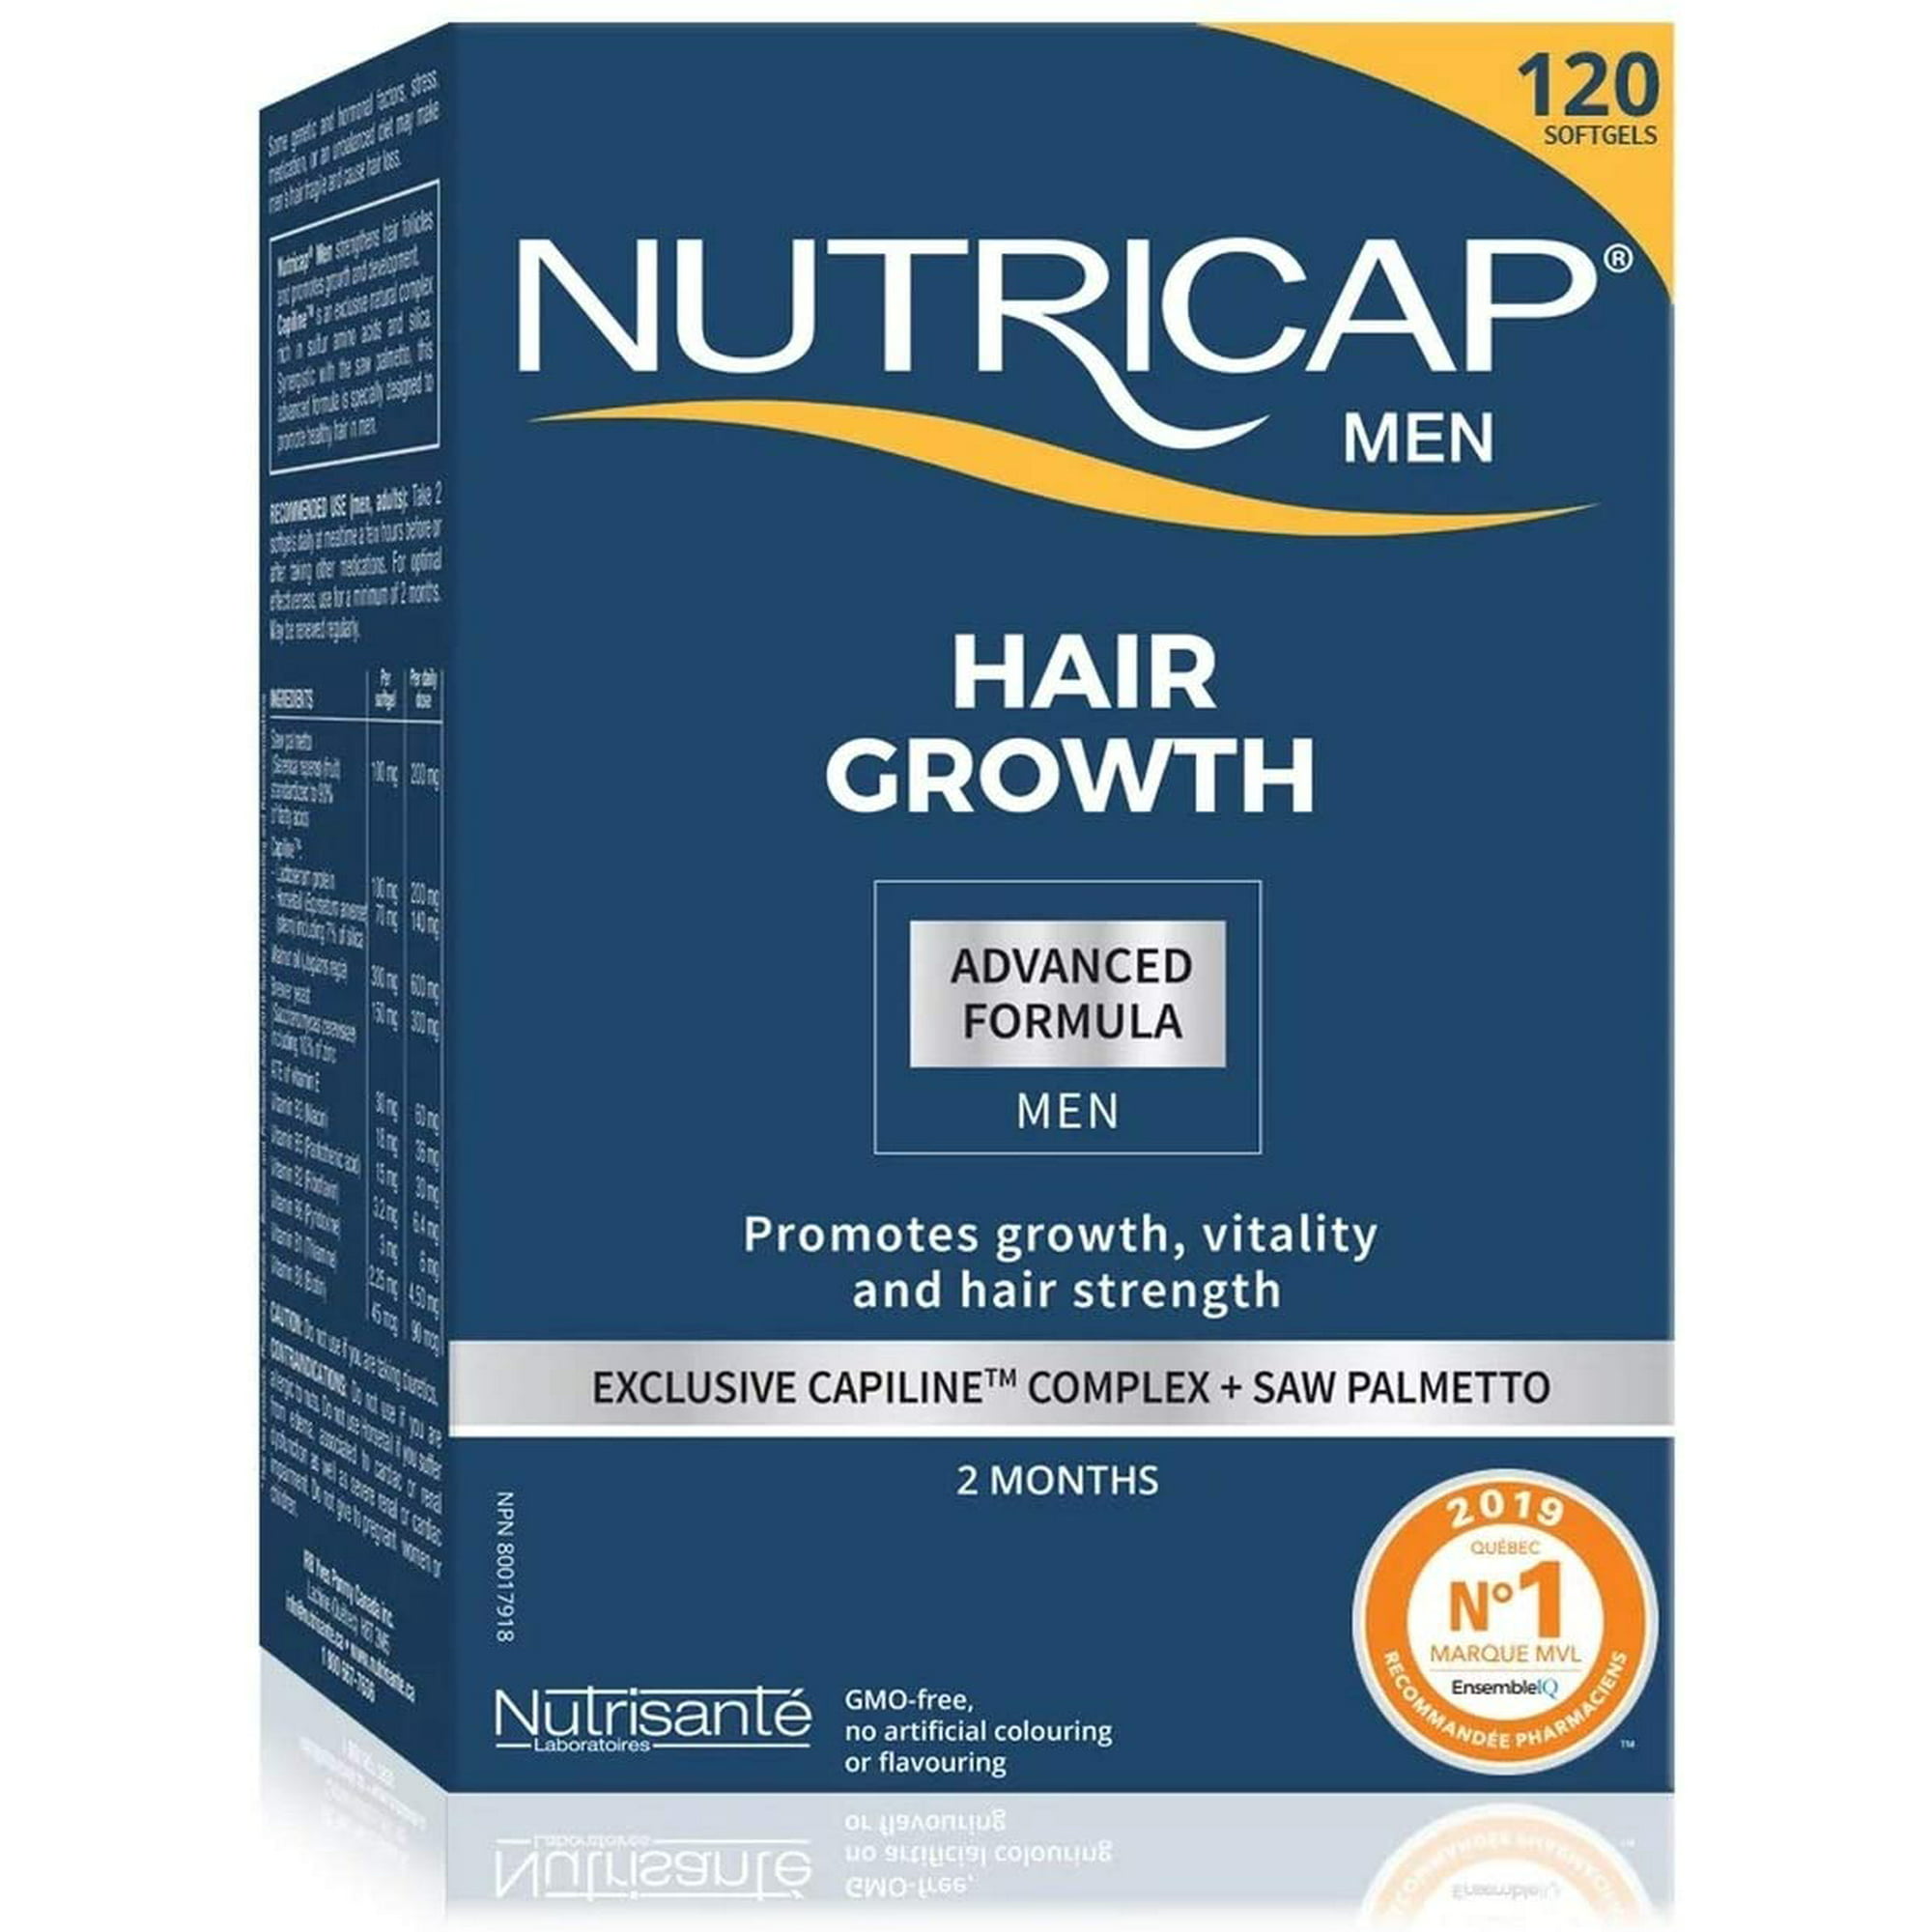 Nutricap for Men Hair Growth Advanced Formula 120 capsules | Walmart Canada